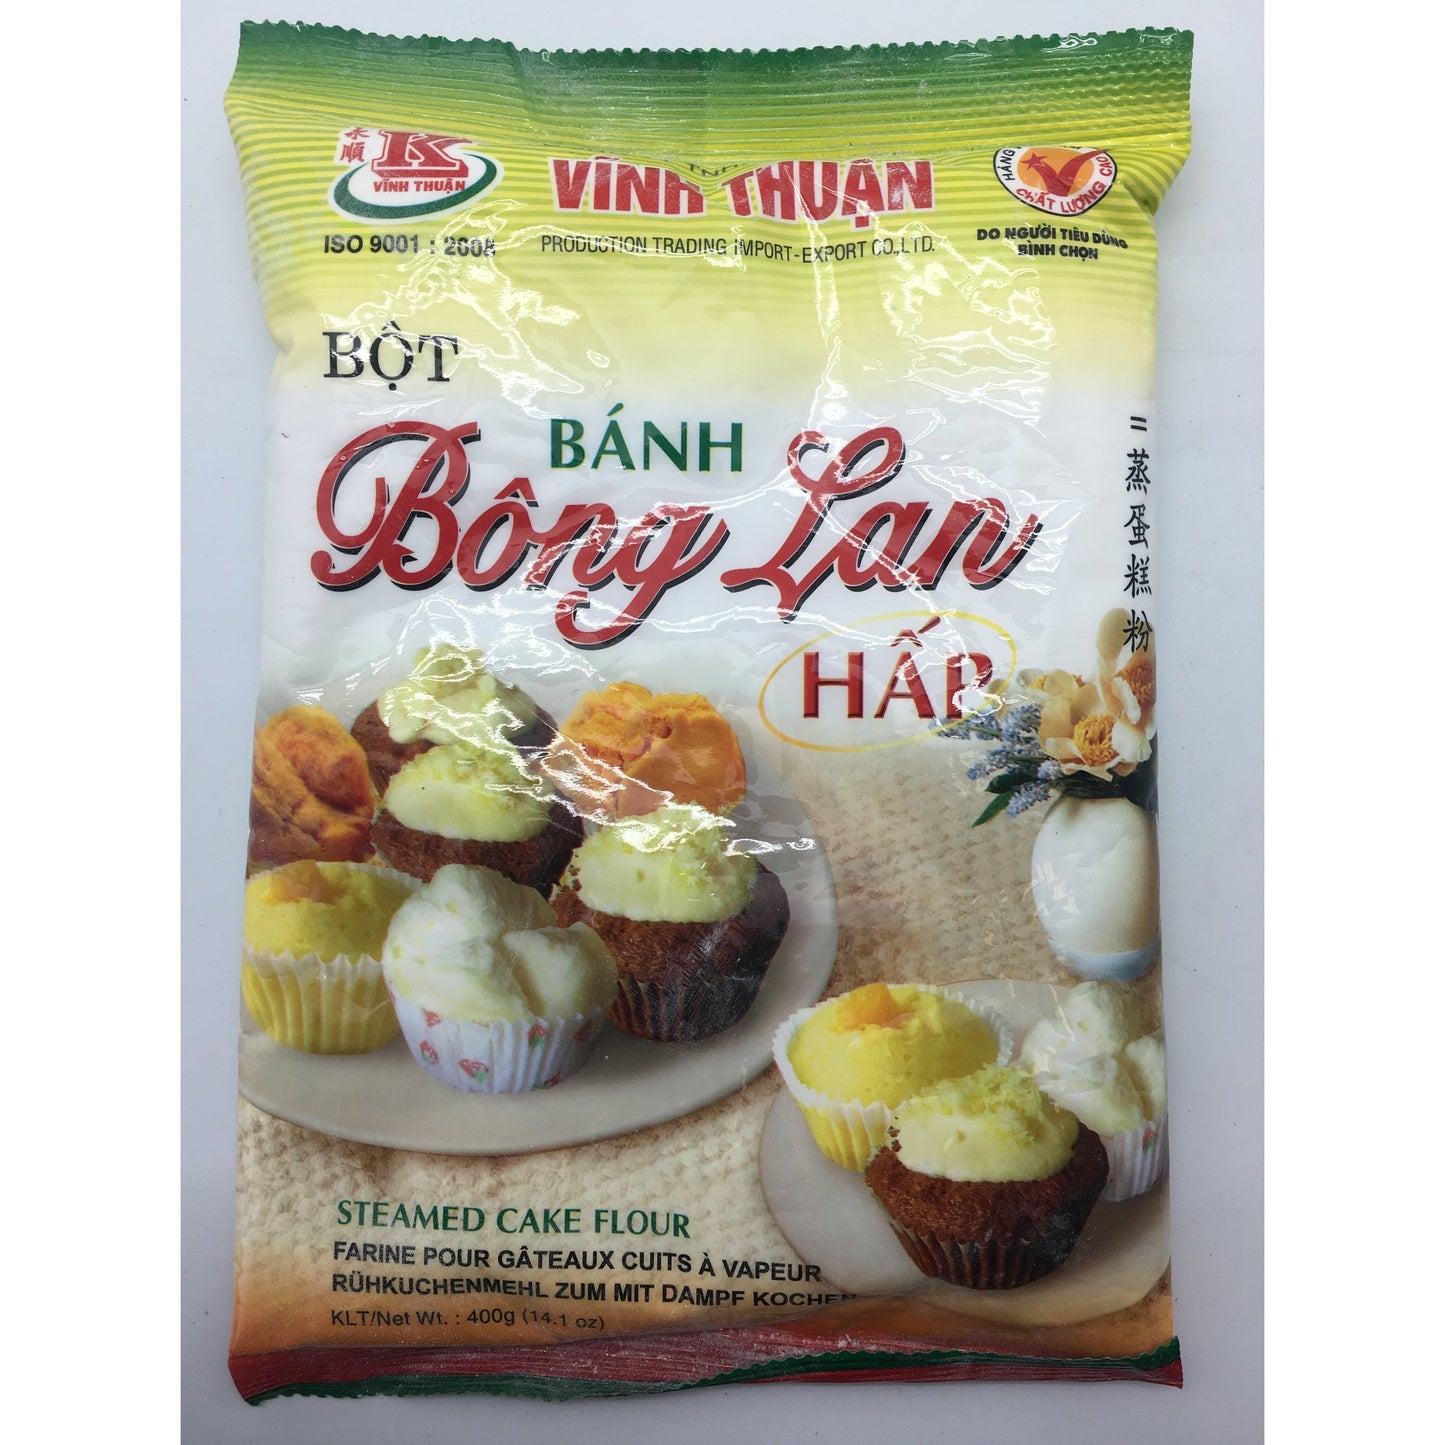 PD011K Vinh Thuan Brand -Steamed Cake Flour 400g - 20 bags / 1CTN - New Eastland Pty Ltd - Asian food wholesalers